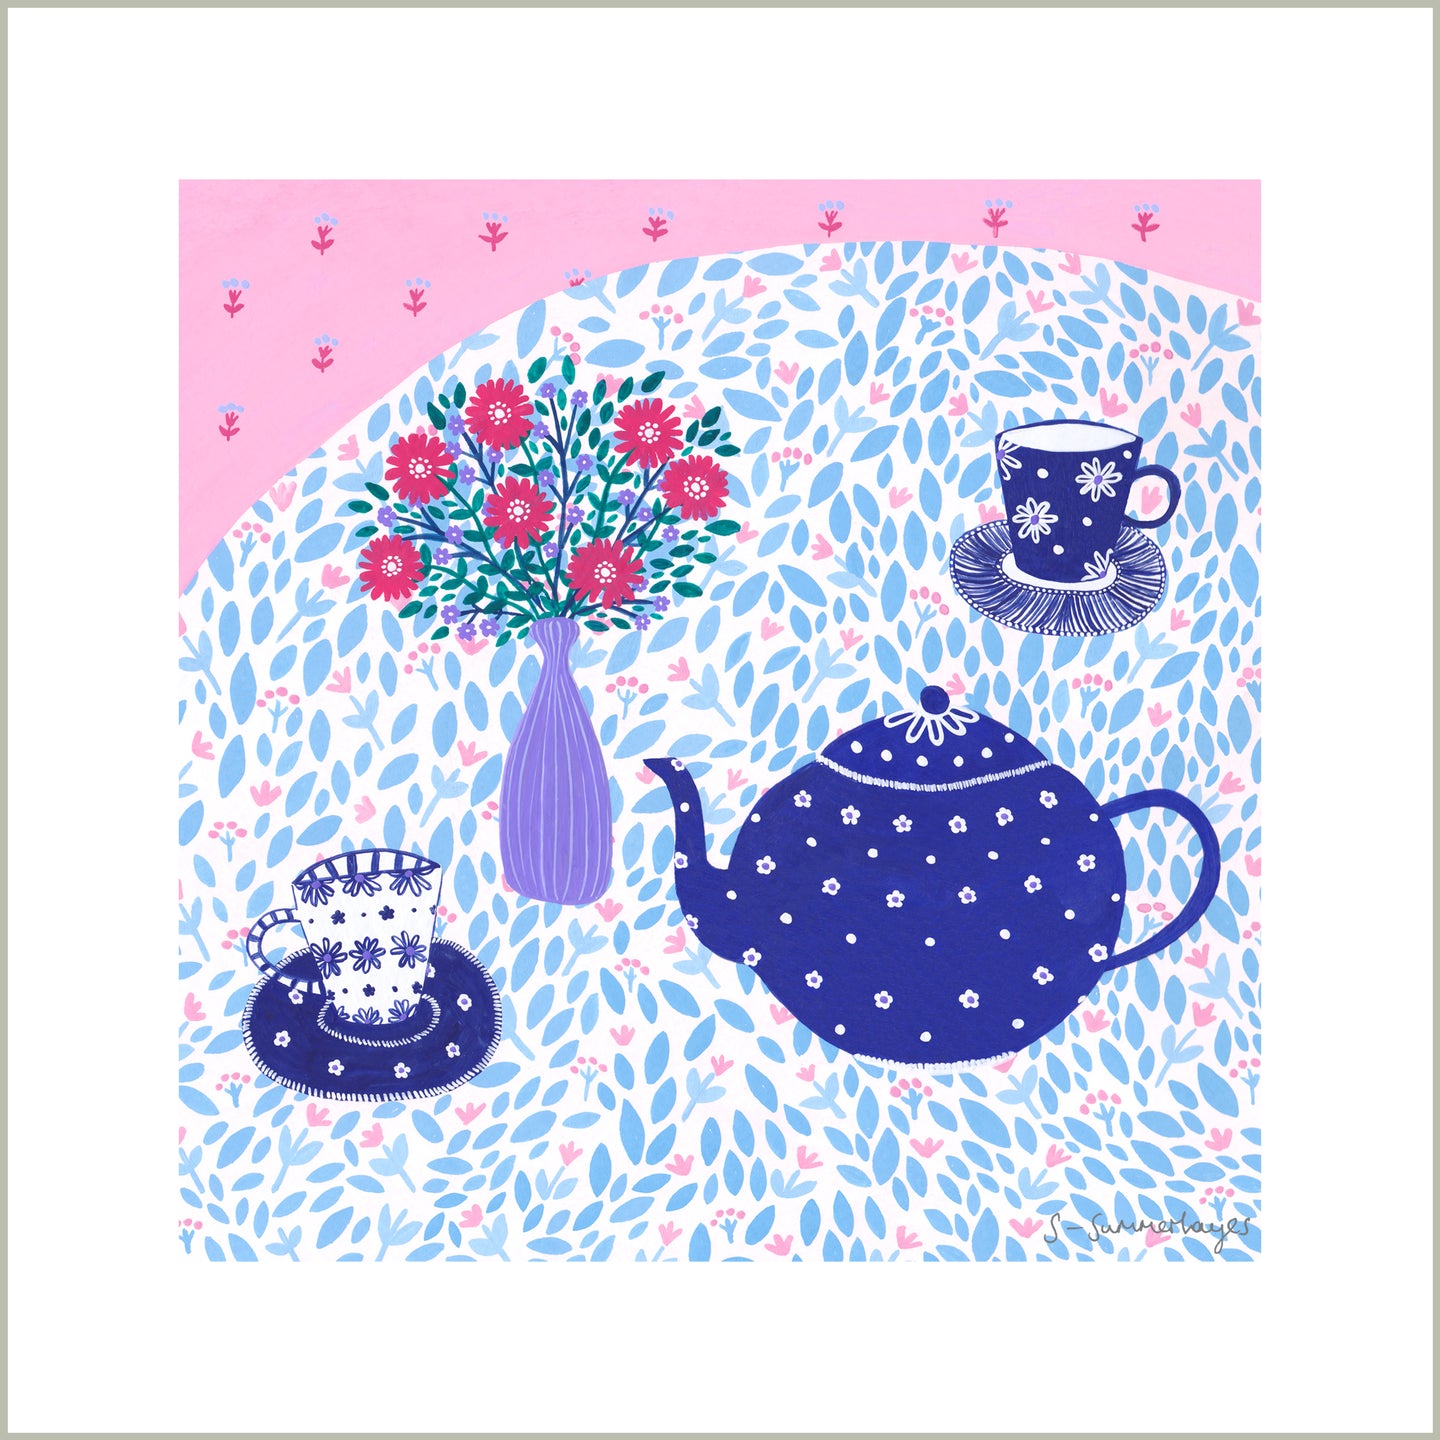 Teapot Art Print